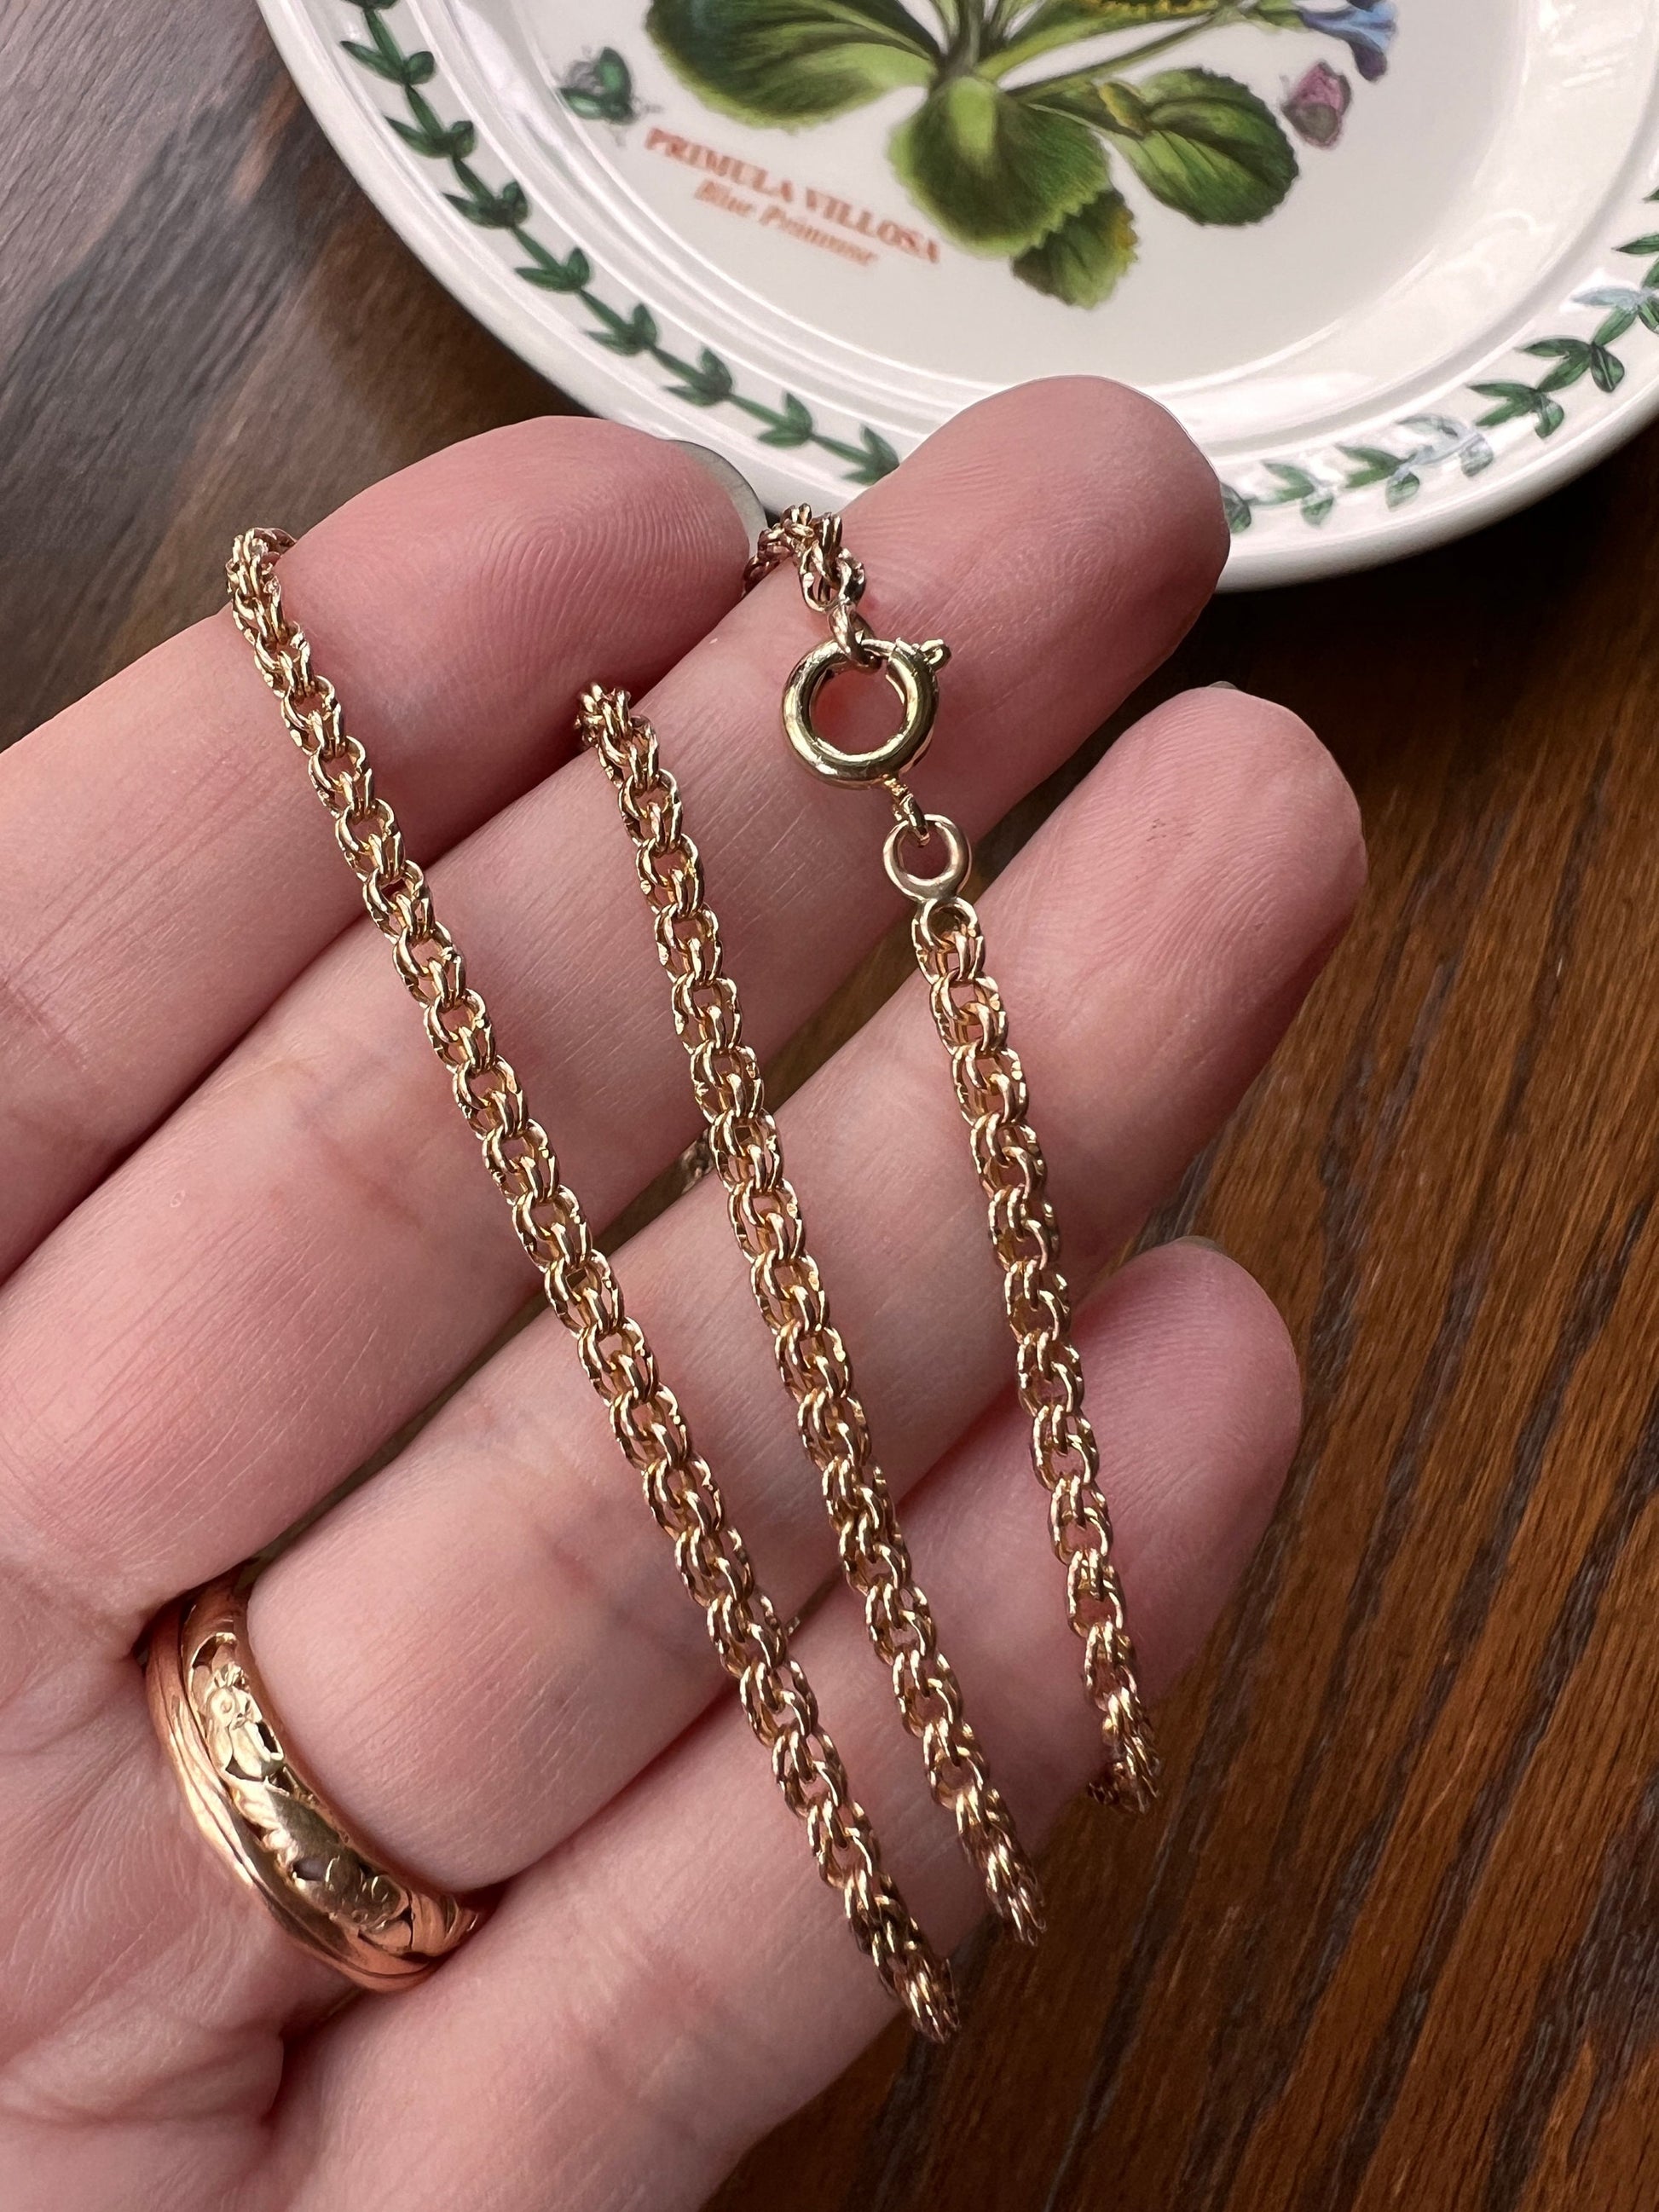 Unique Necklace Double CHAIN Victorian ANTIQUE 14" Choker Collar Layering 5g 10k Rose Gold Solid Bracelet Romantic Gift Pendant Holder 2.5mm